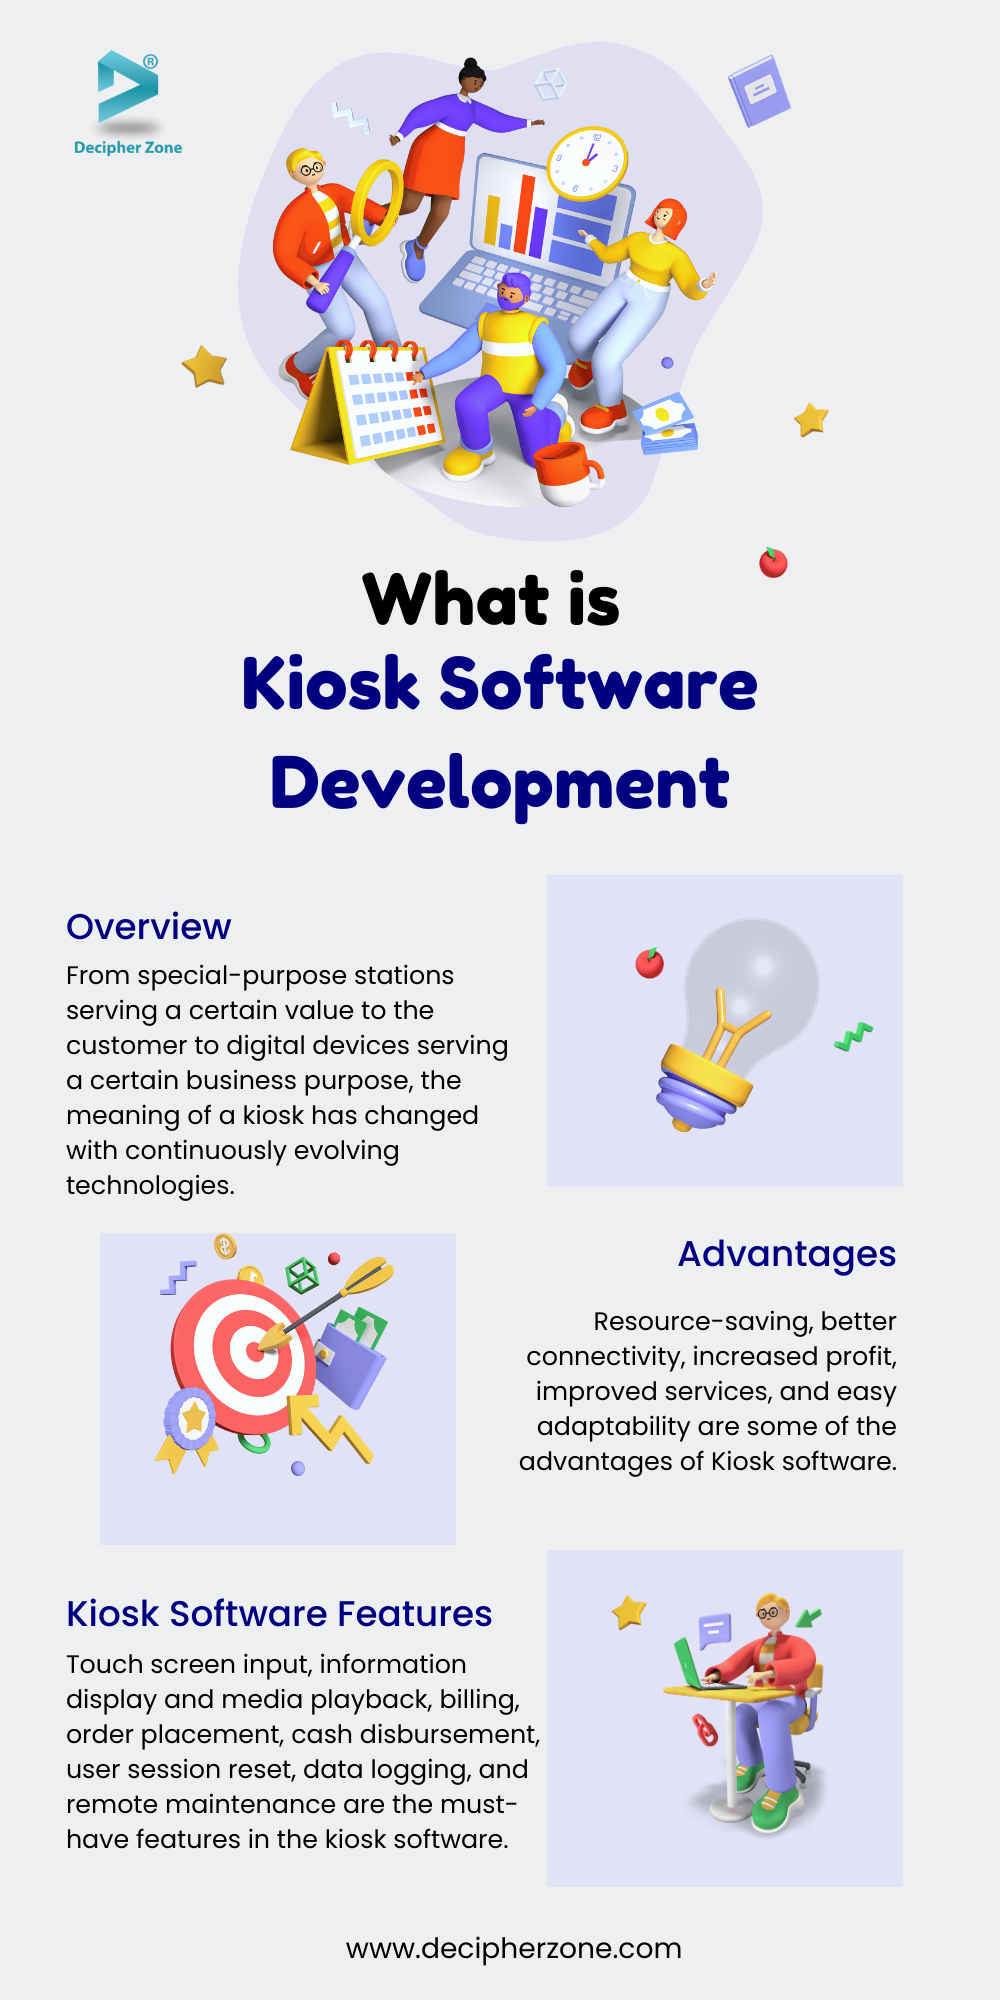 Kiosk Software Development